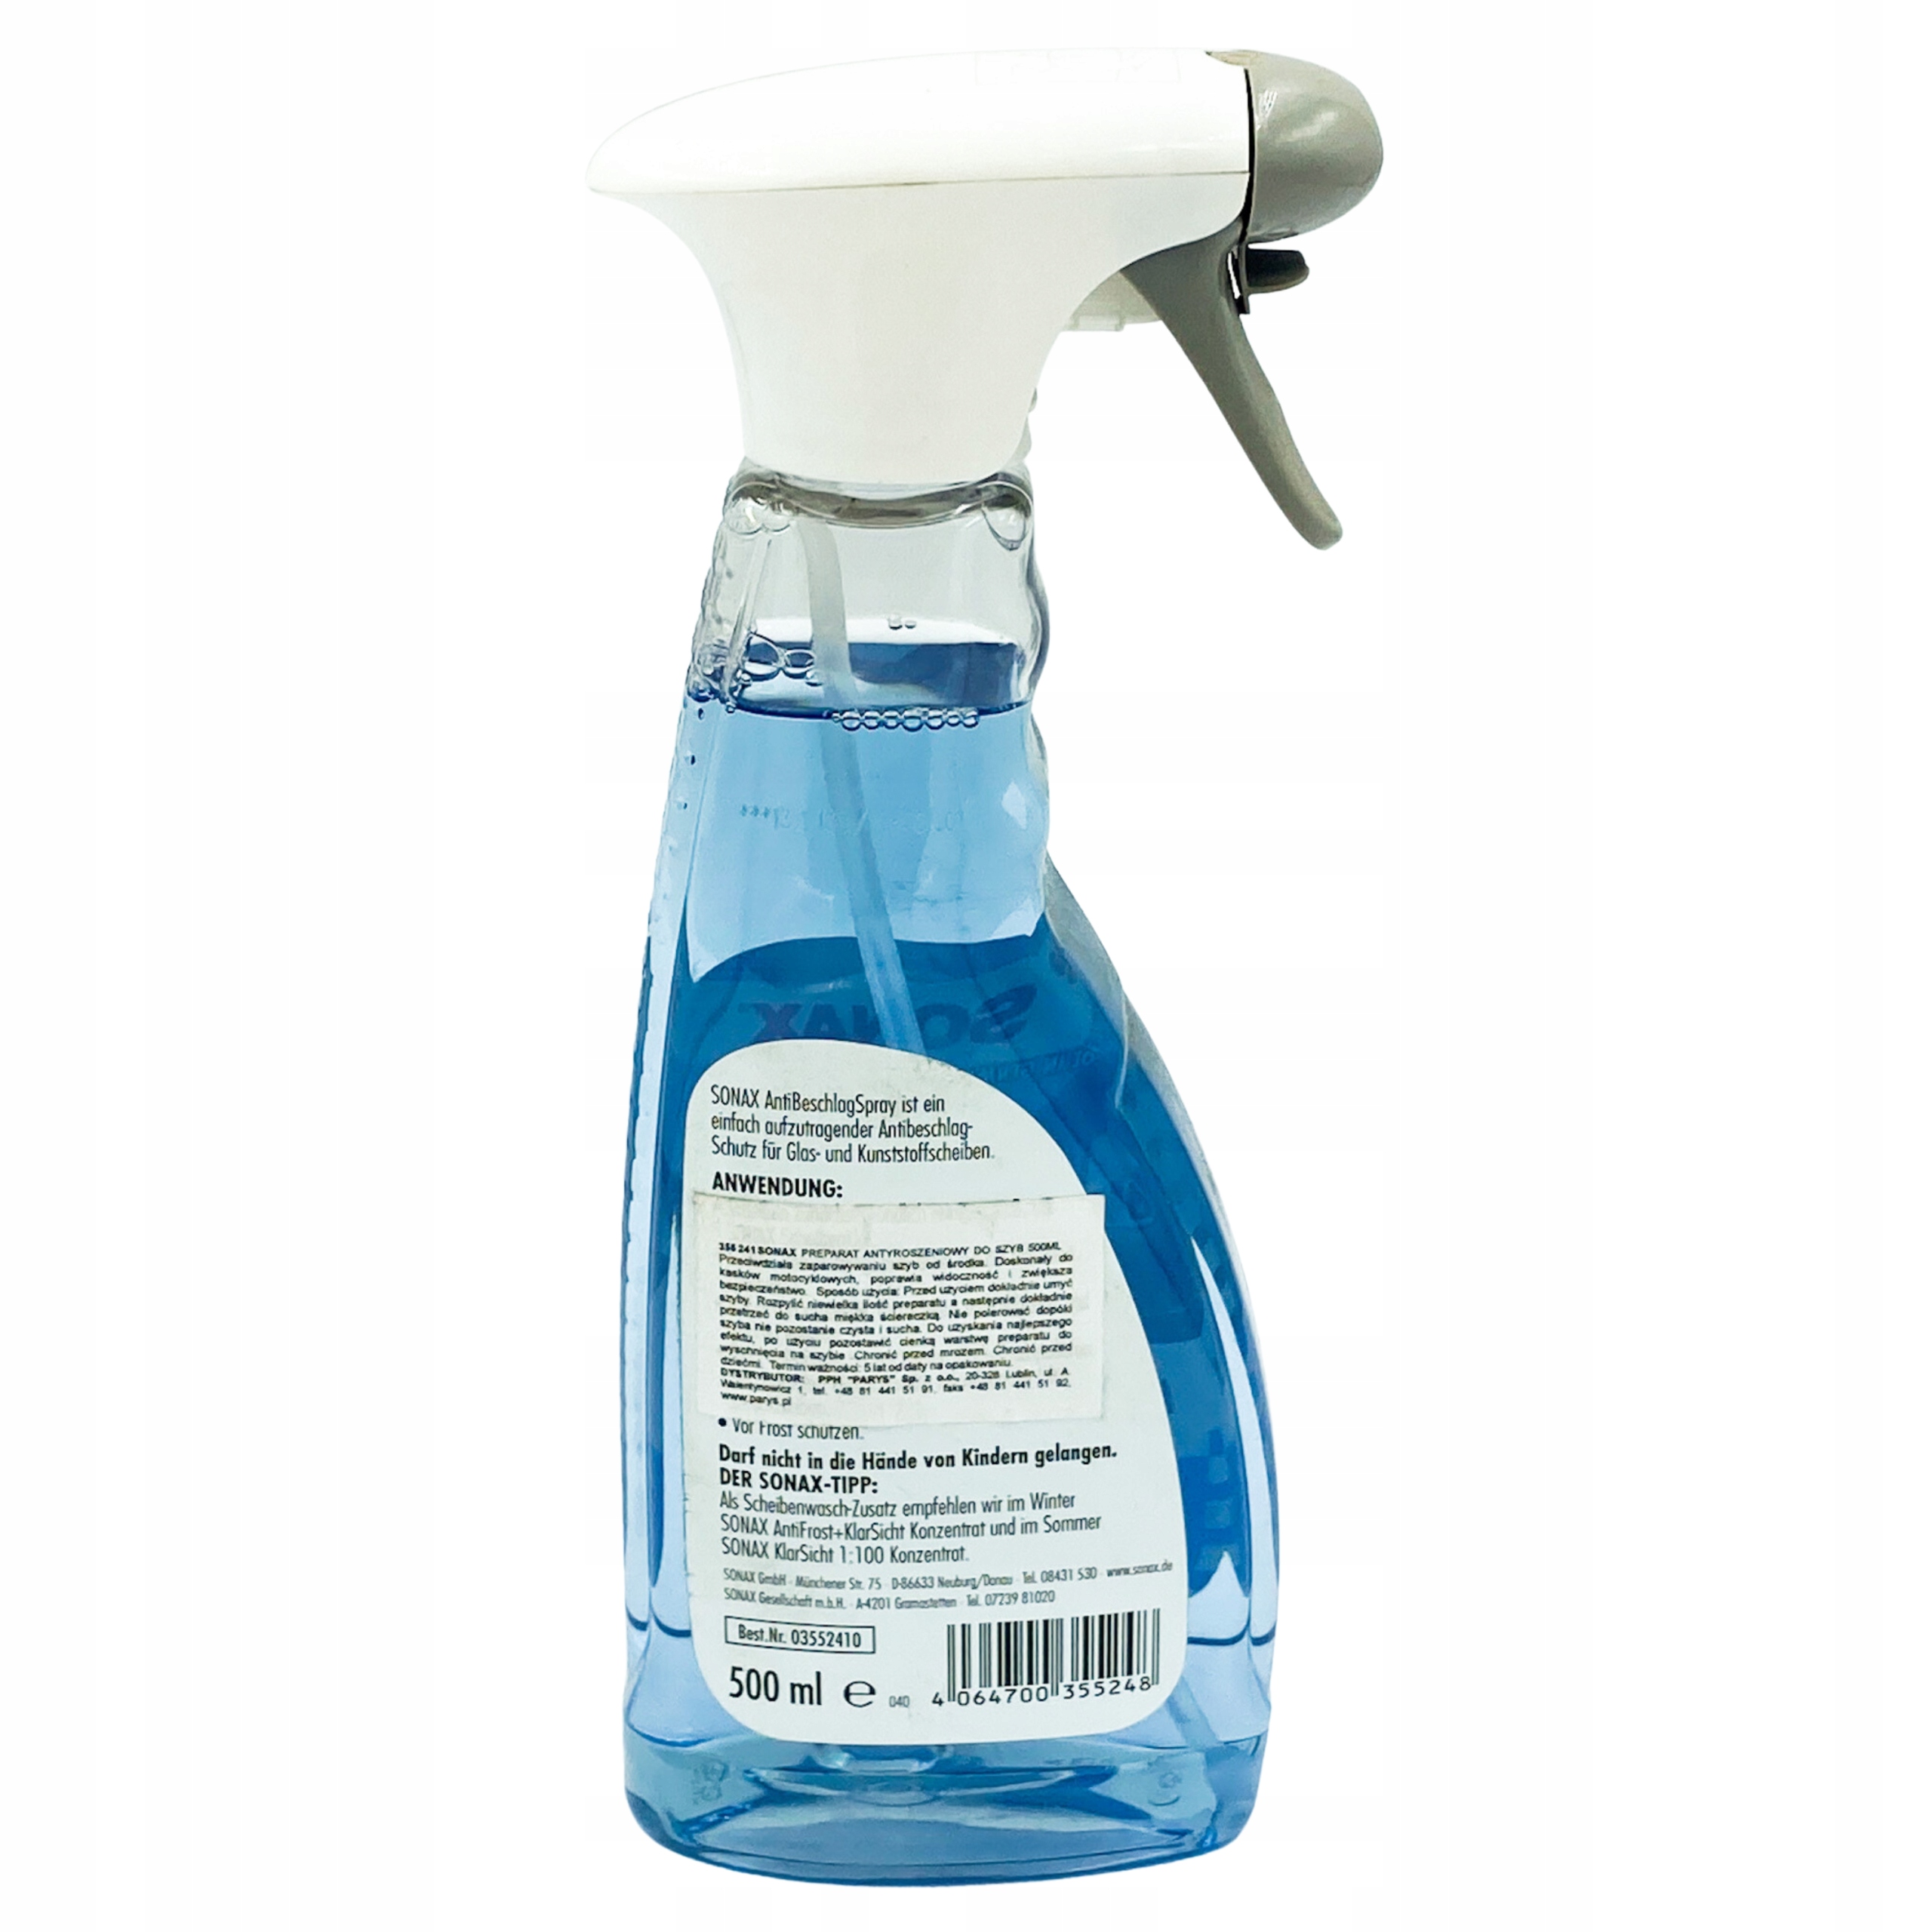 Sonax Anti-Fog Spray, 500 ml - 03552410